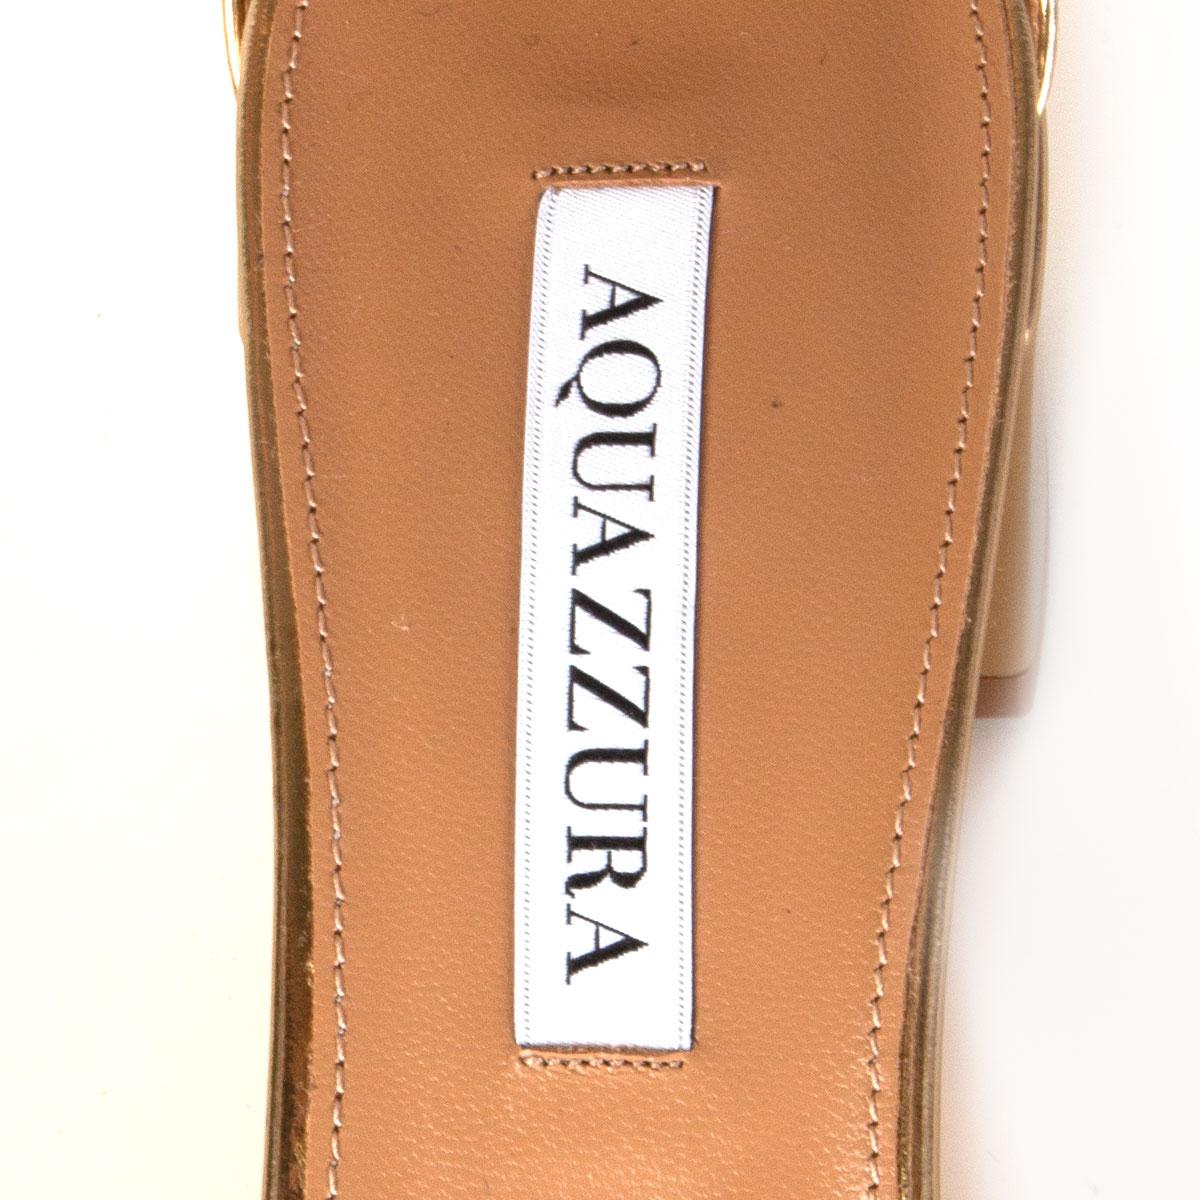 Gold AQUAZZURA metallic gold leather PURIST 50 BLOCK HEEL Sandals Shoes 38